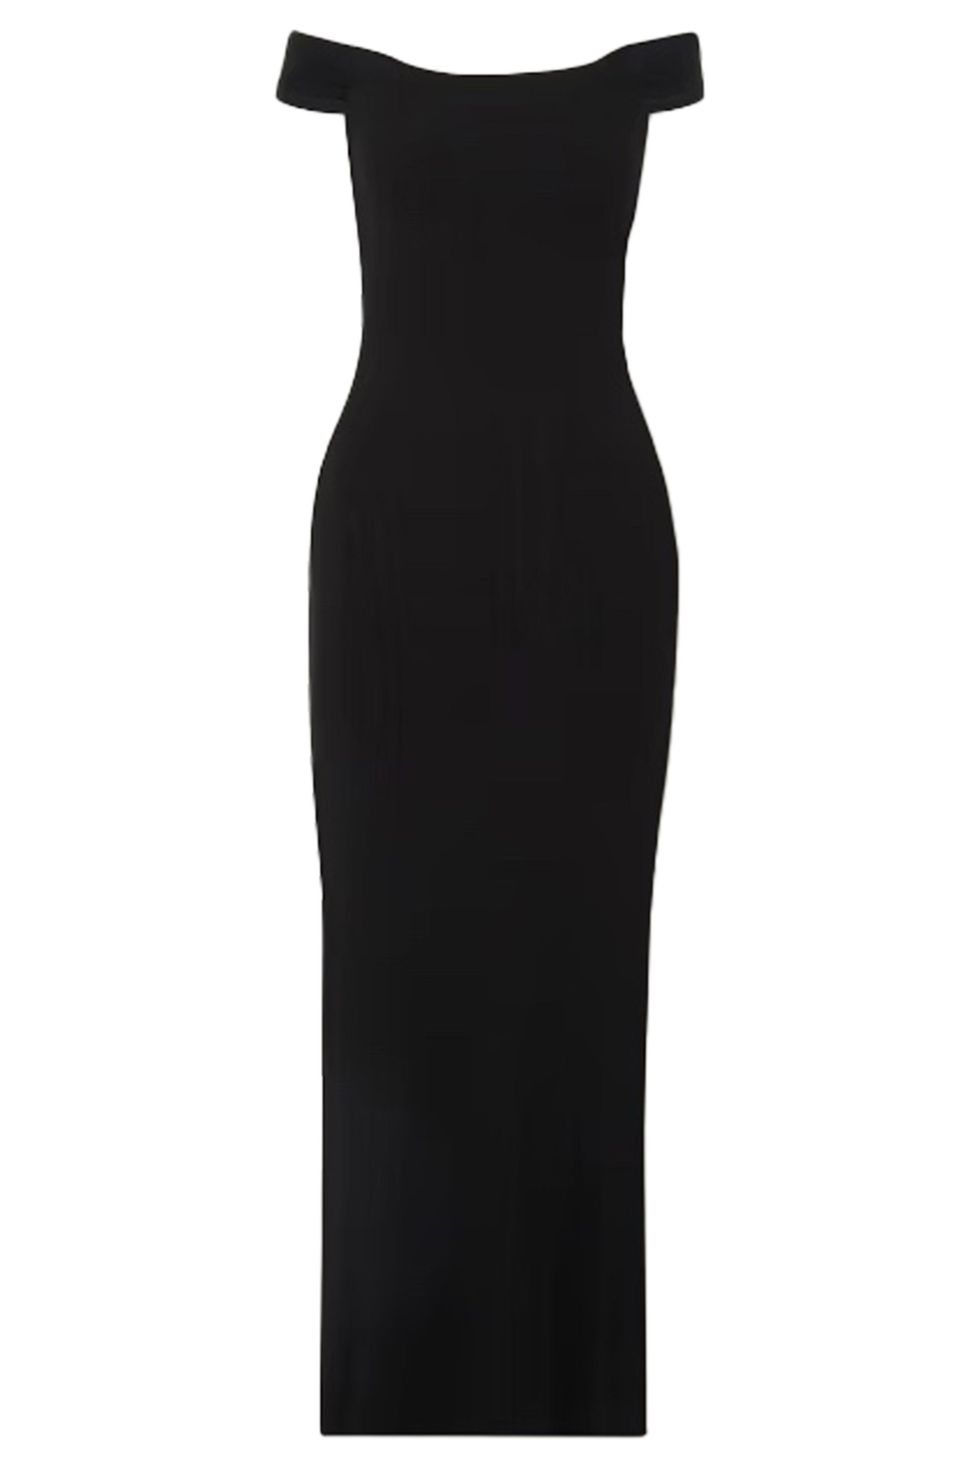 SIMS off-the-shoulder black dress